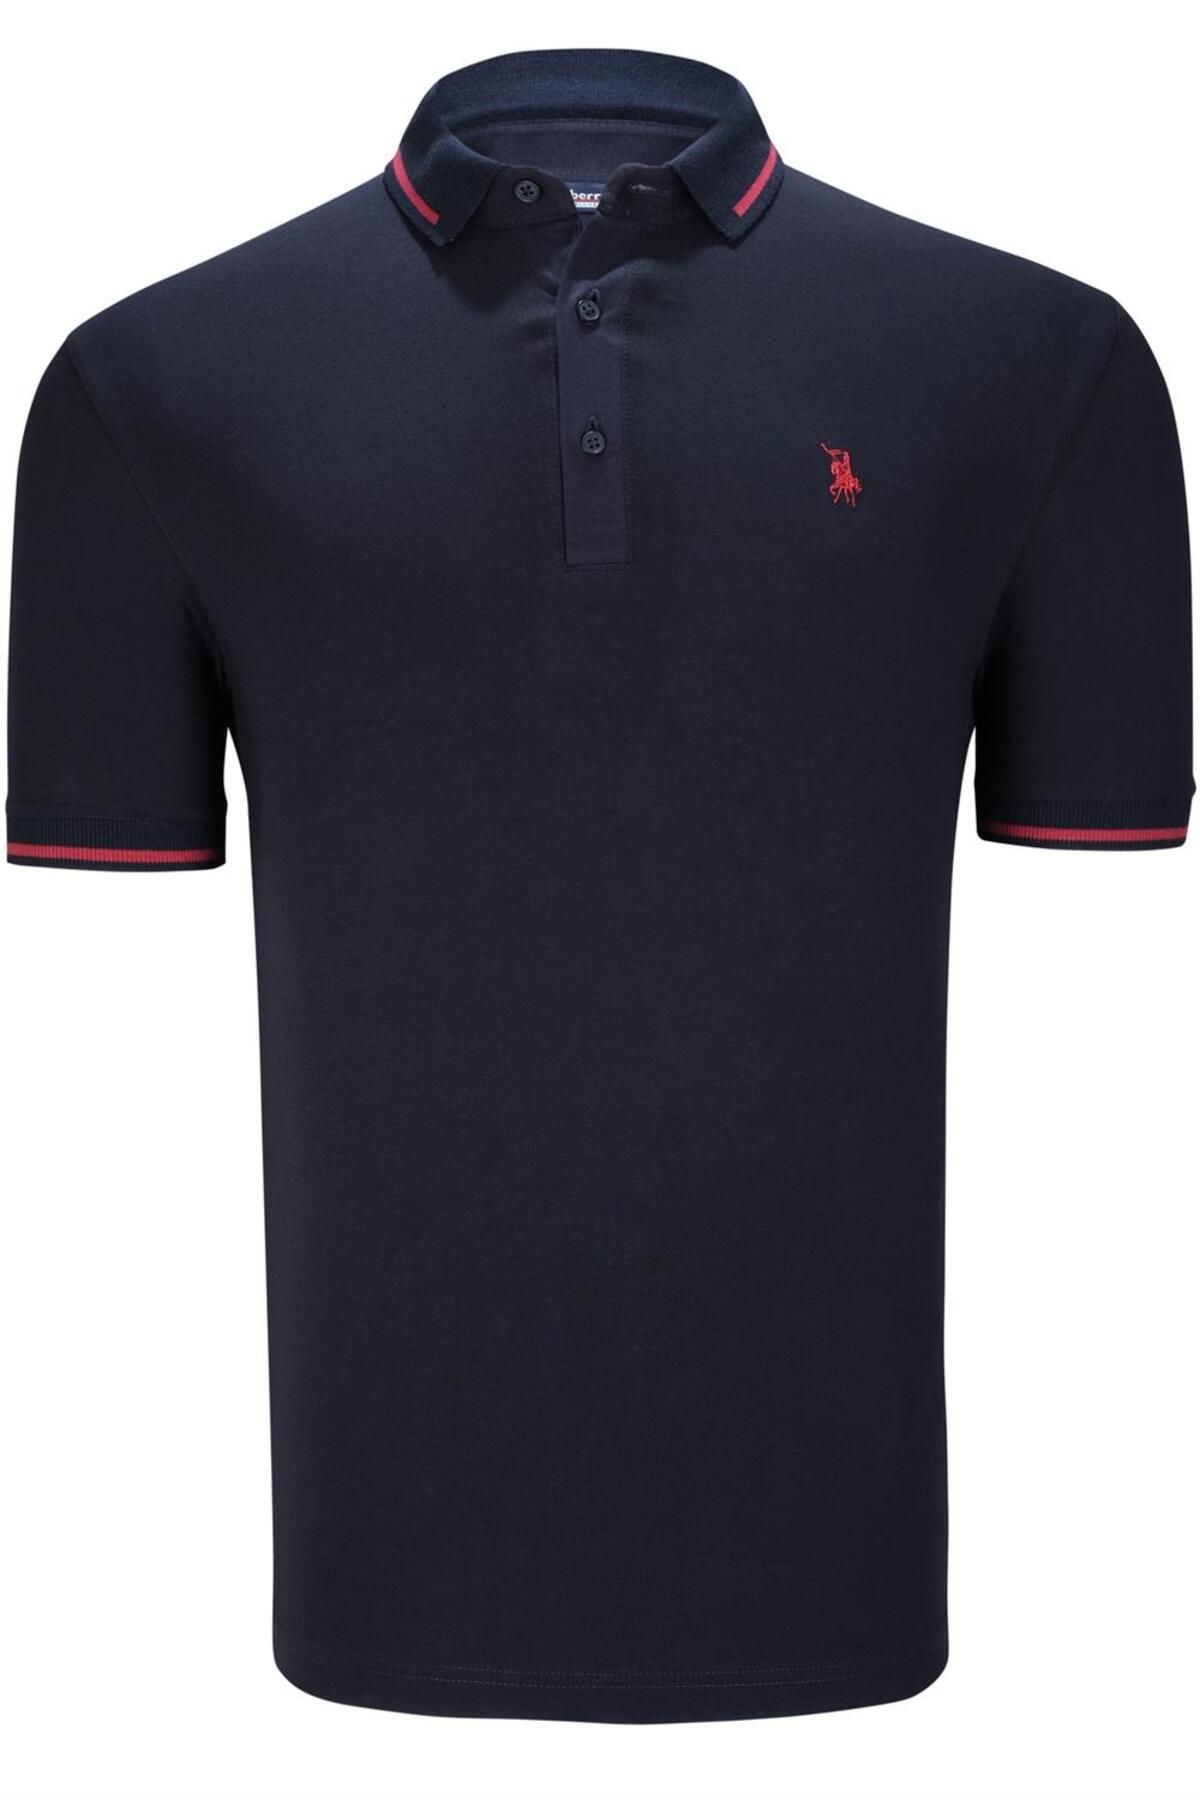 Dewberry ست شش عددی تی شرت مردانه T8586 DEWBERRY-مشکی-سفید-آبی تیره-SAX-آنتراسیت-کلارت قرمز